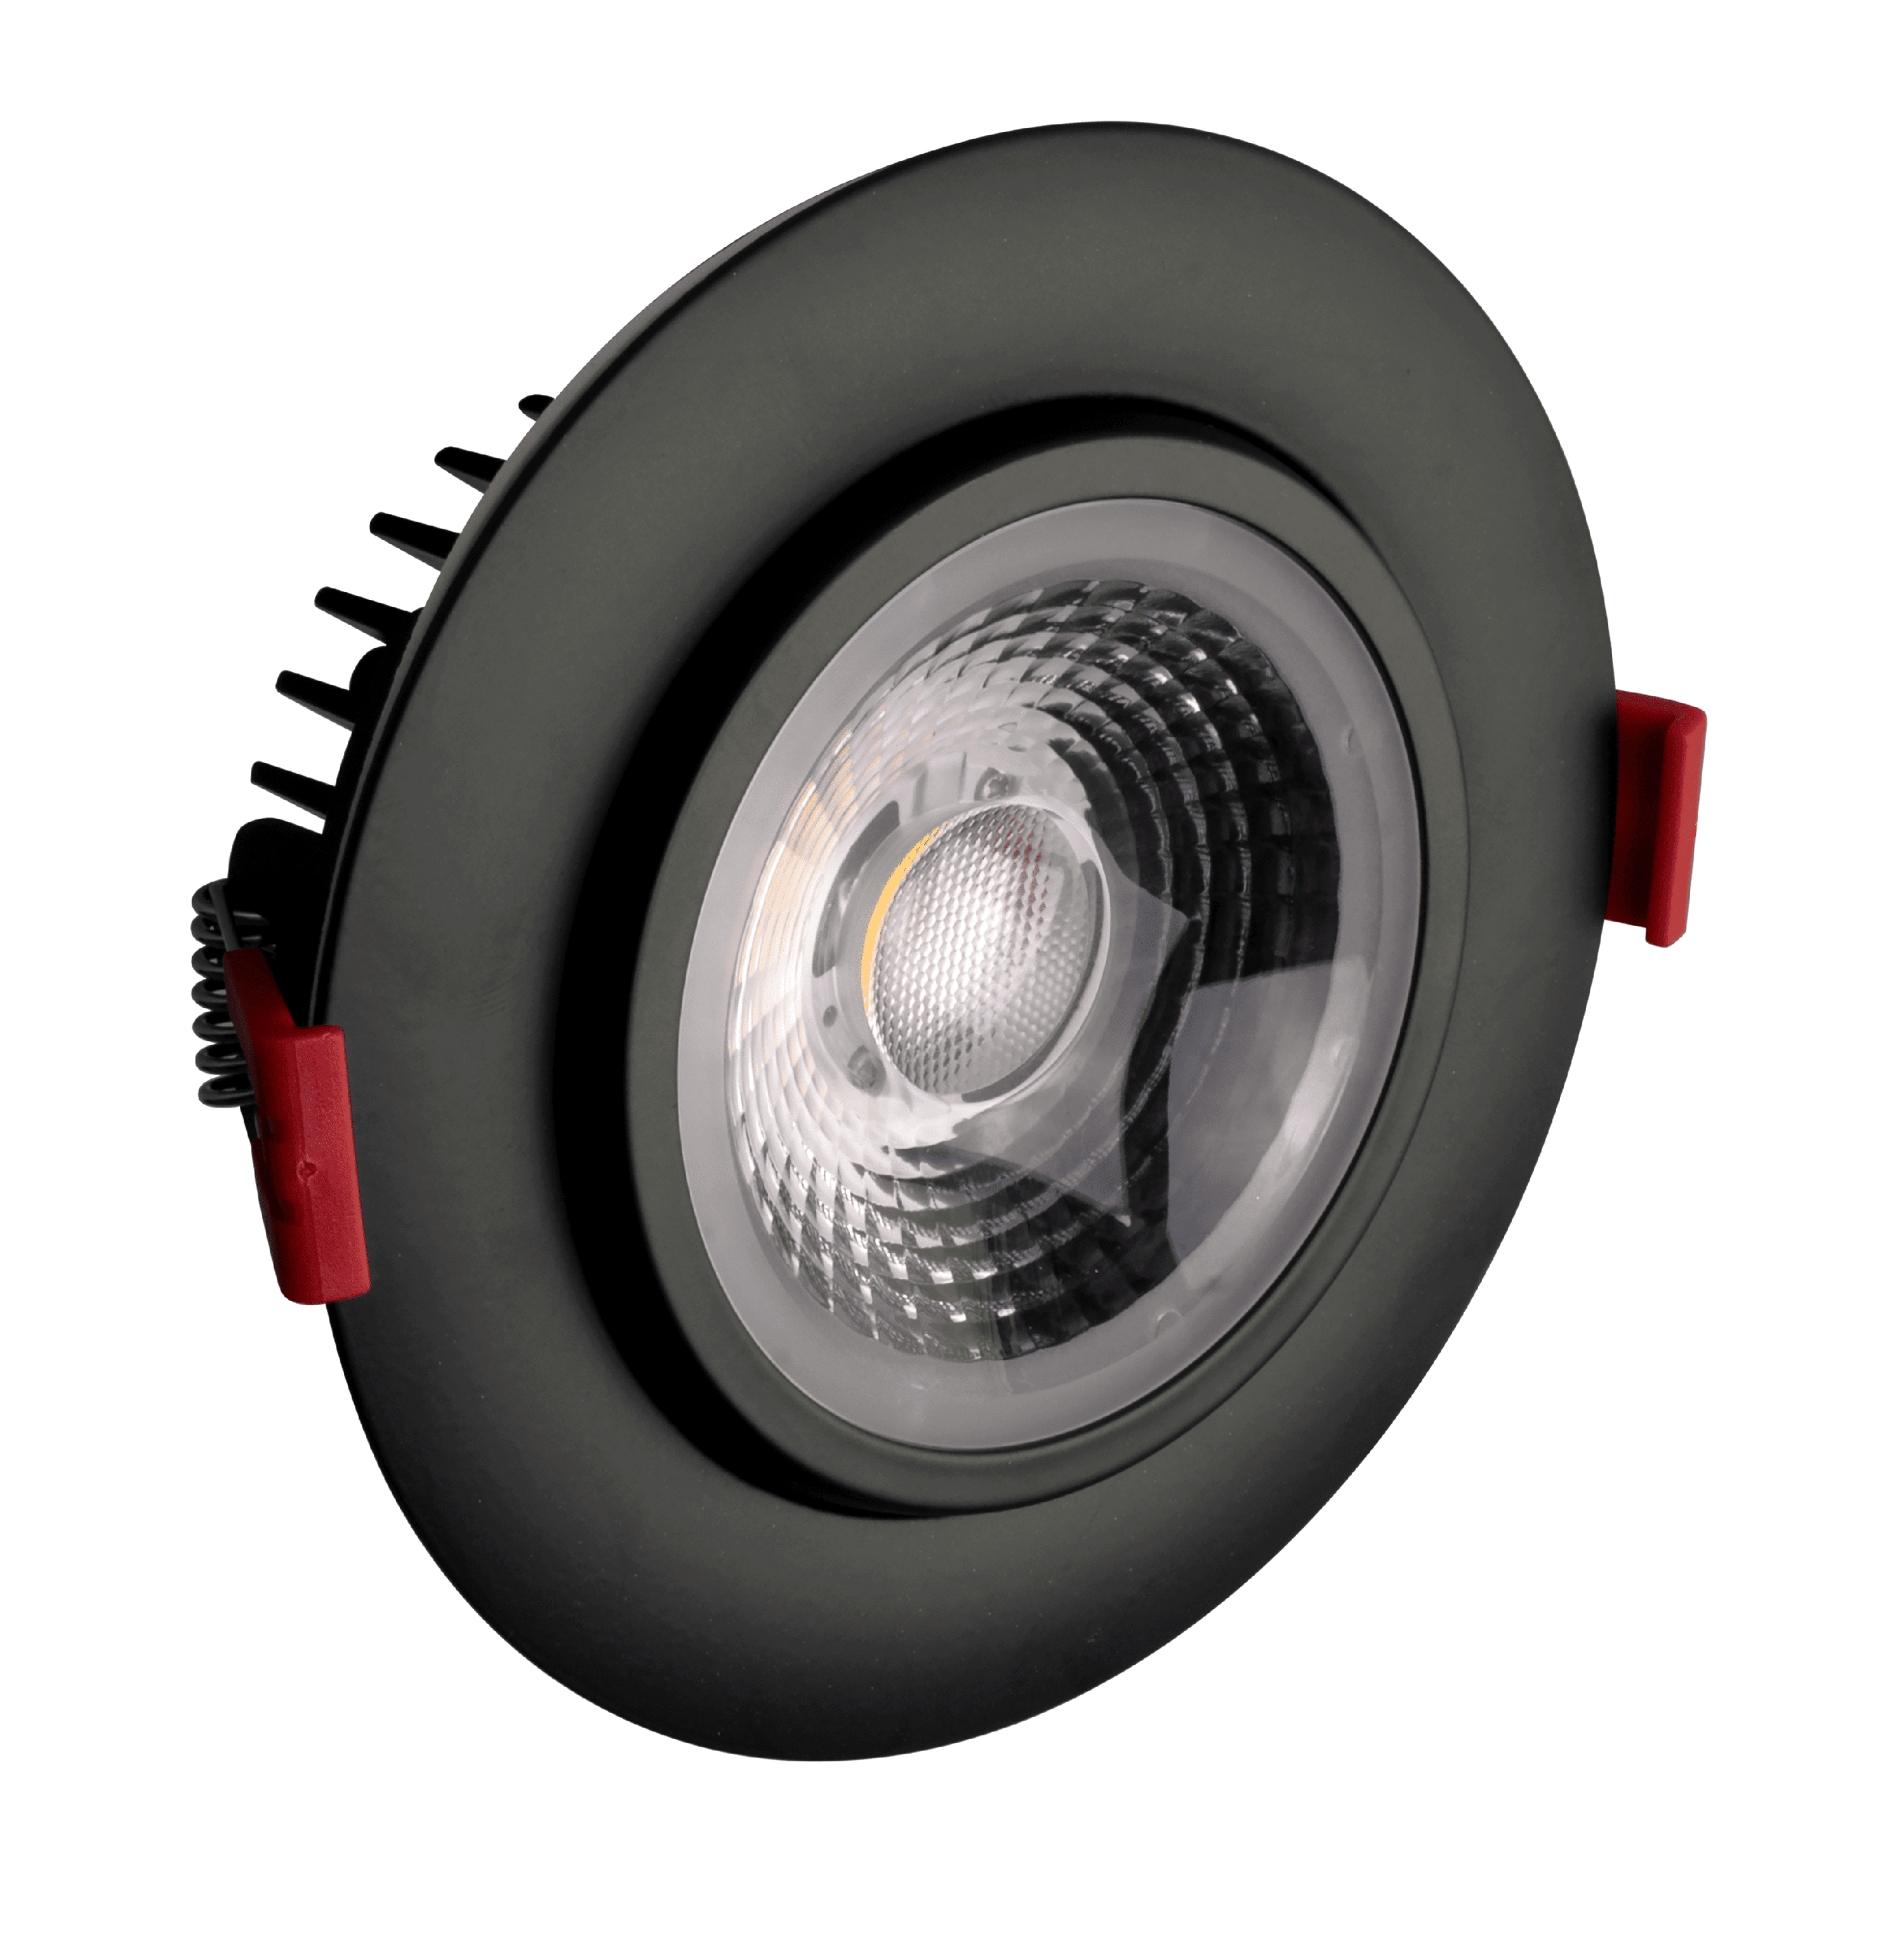 NICOR Lighting 4 inch LED Gimbal Recessed Downlight in Black, 3000K